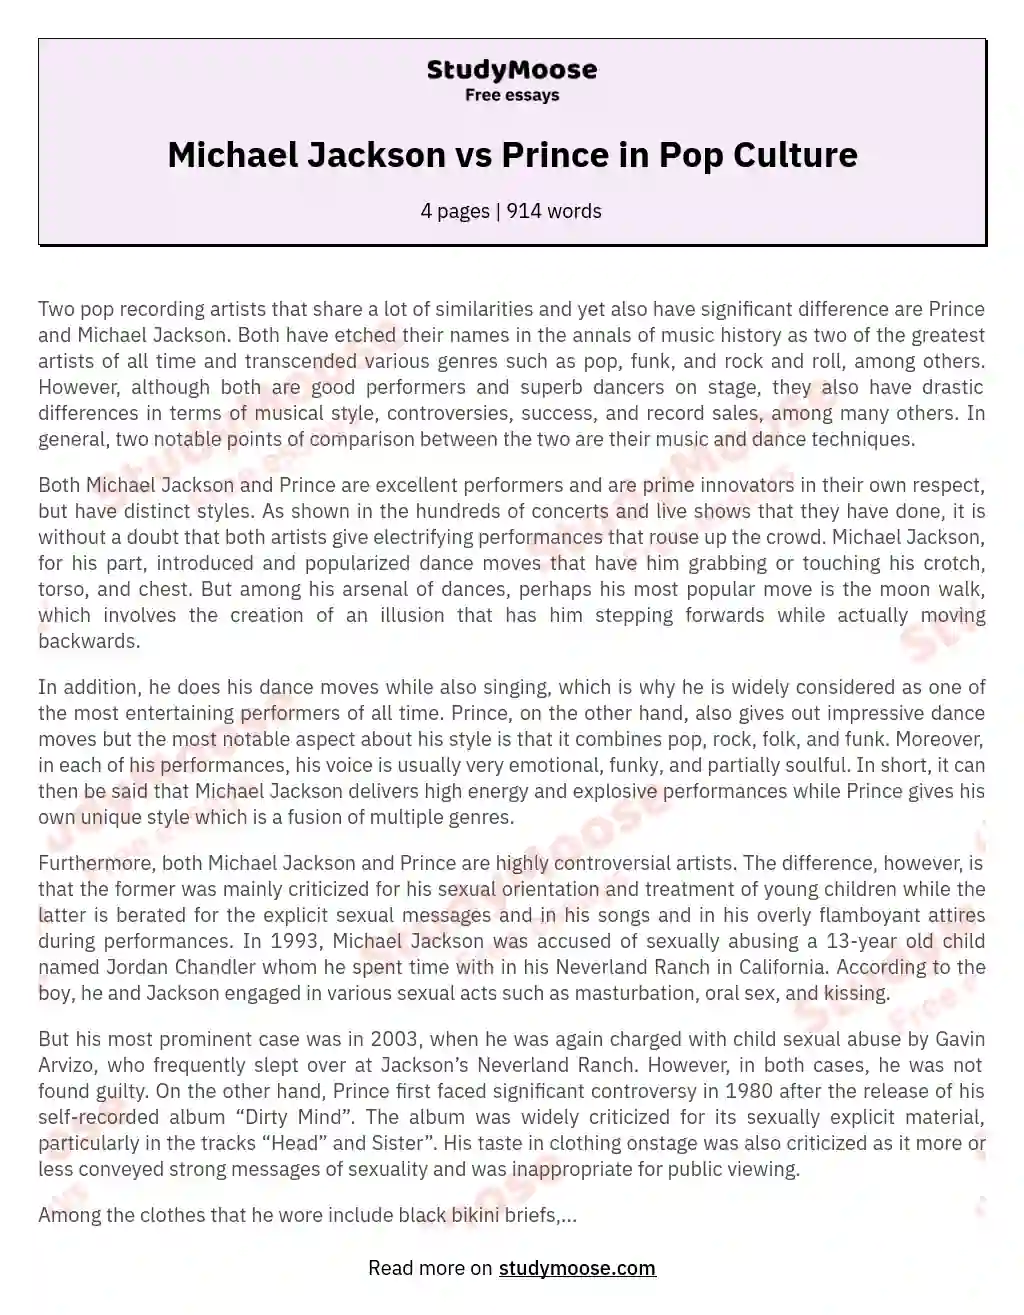 Michael Jackson vs Prince in Pop Culture essay